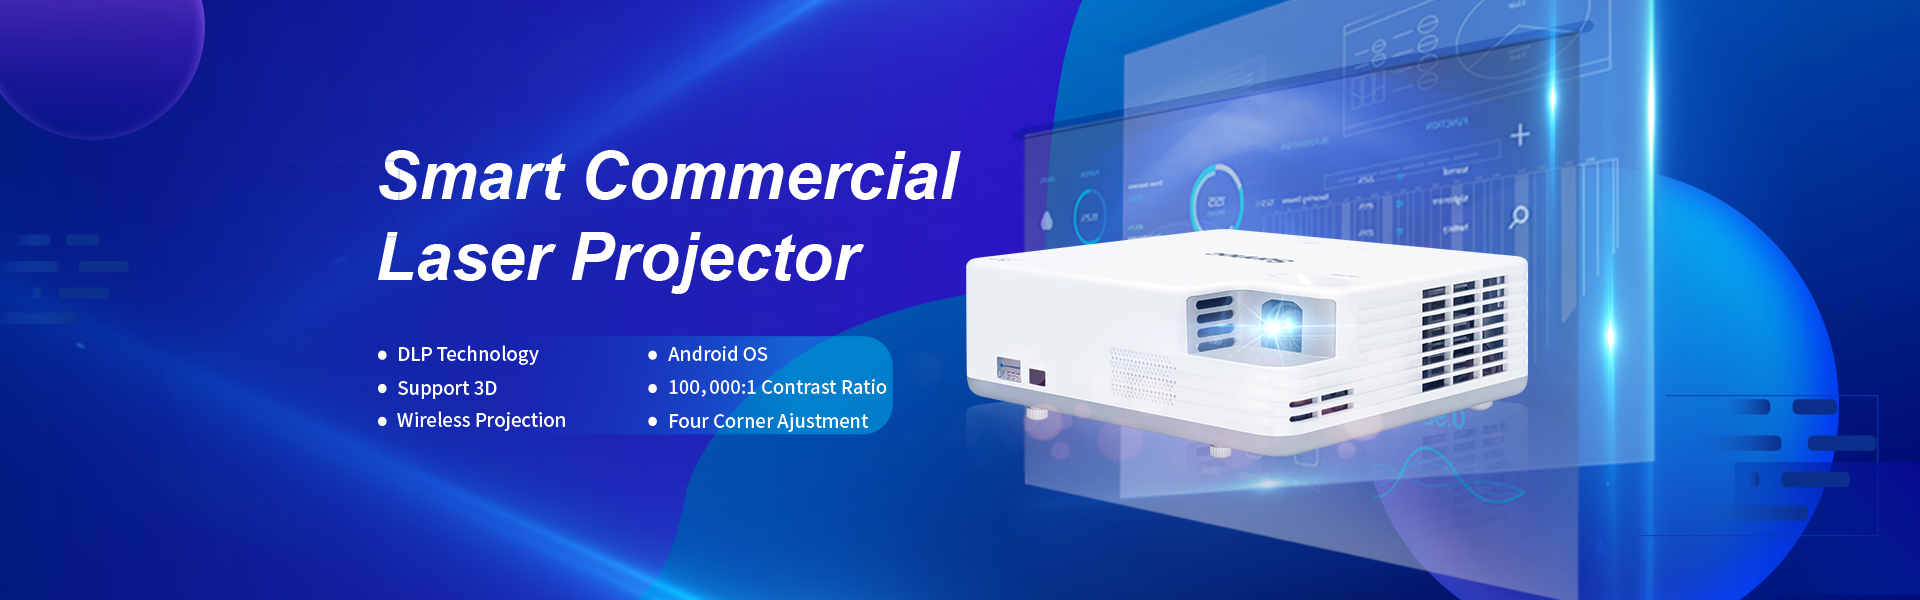 Smart Commercial Laser Projector